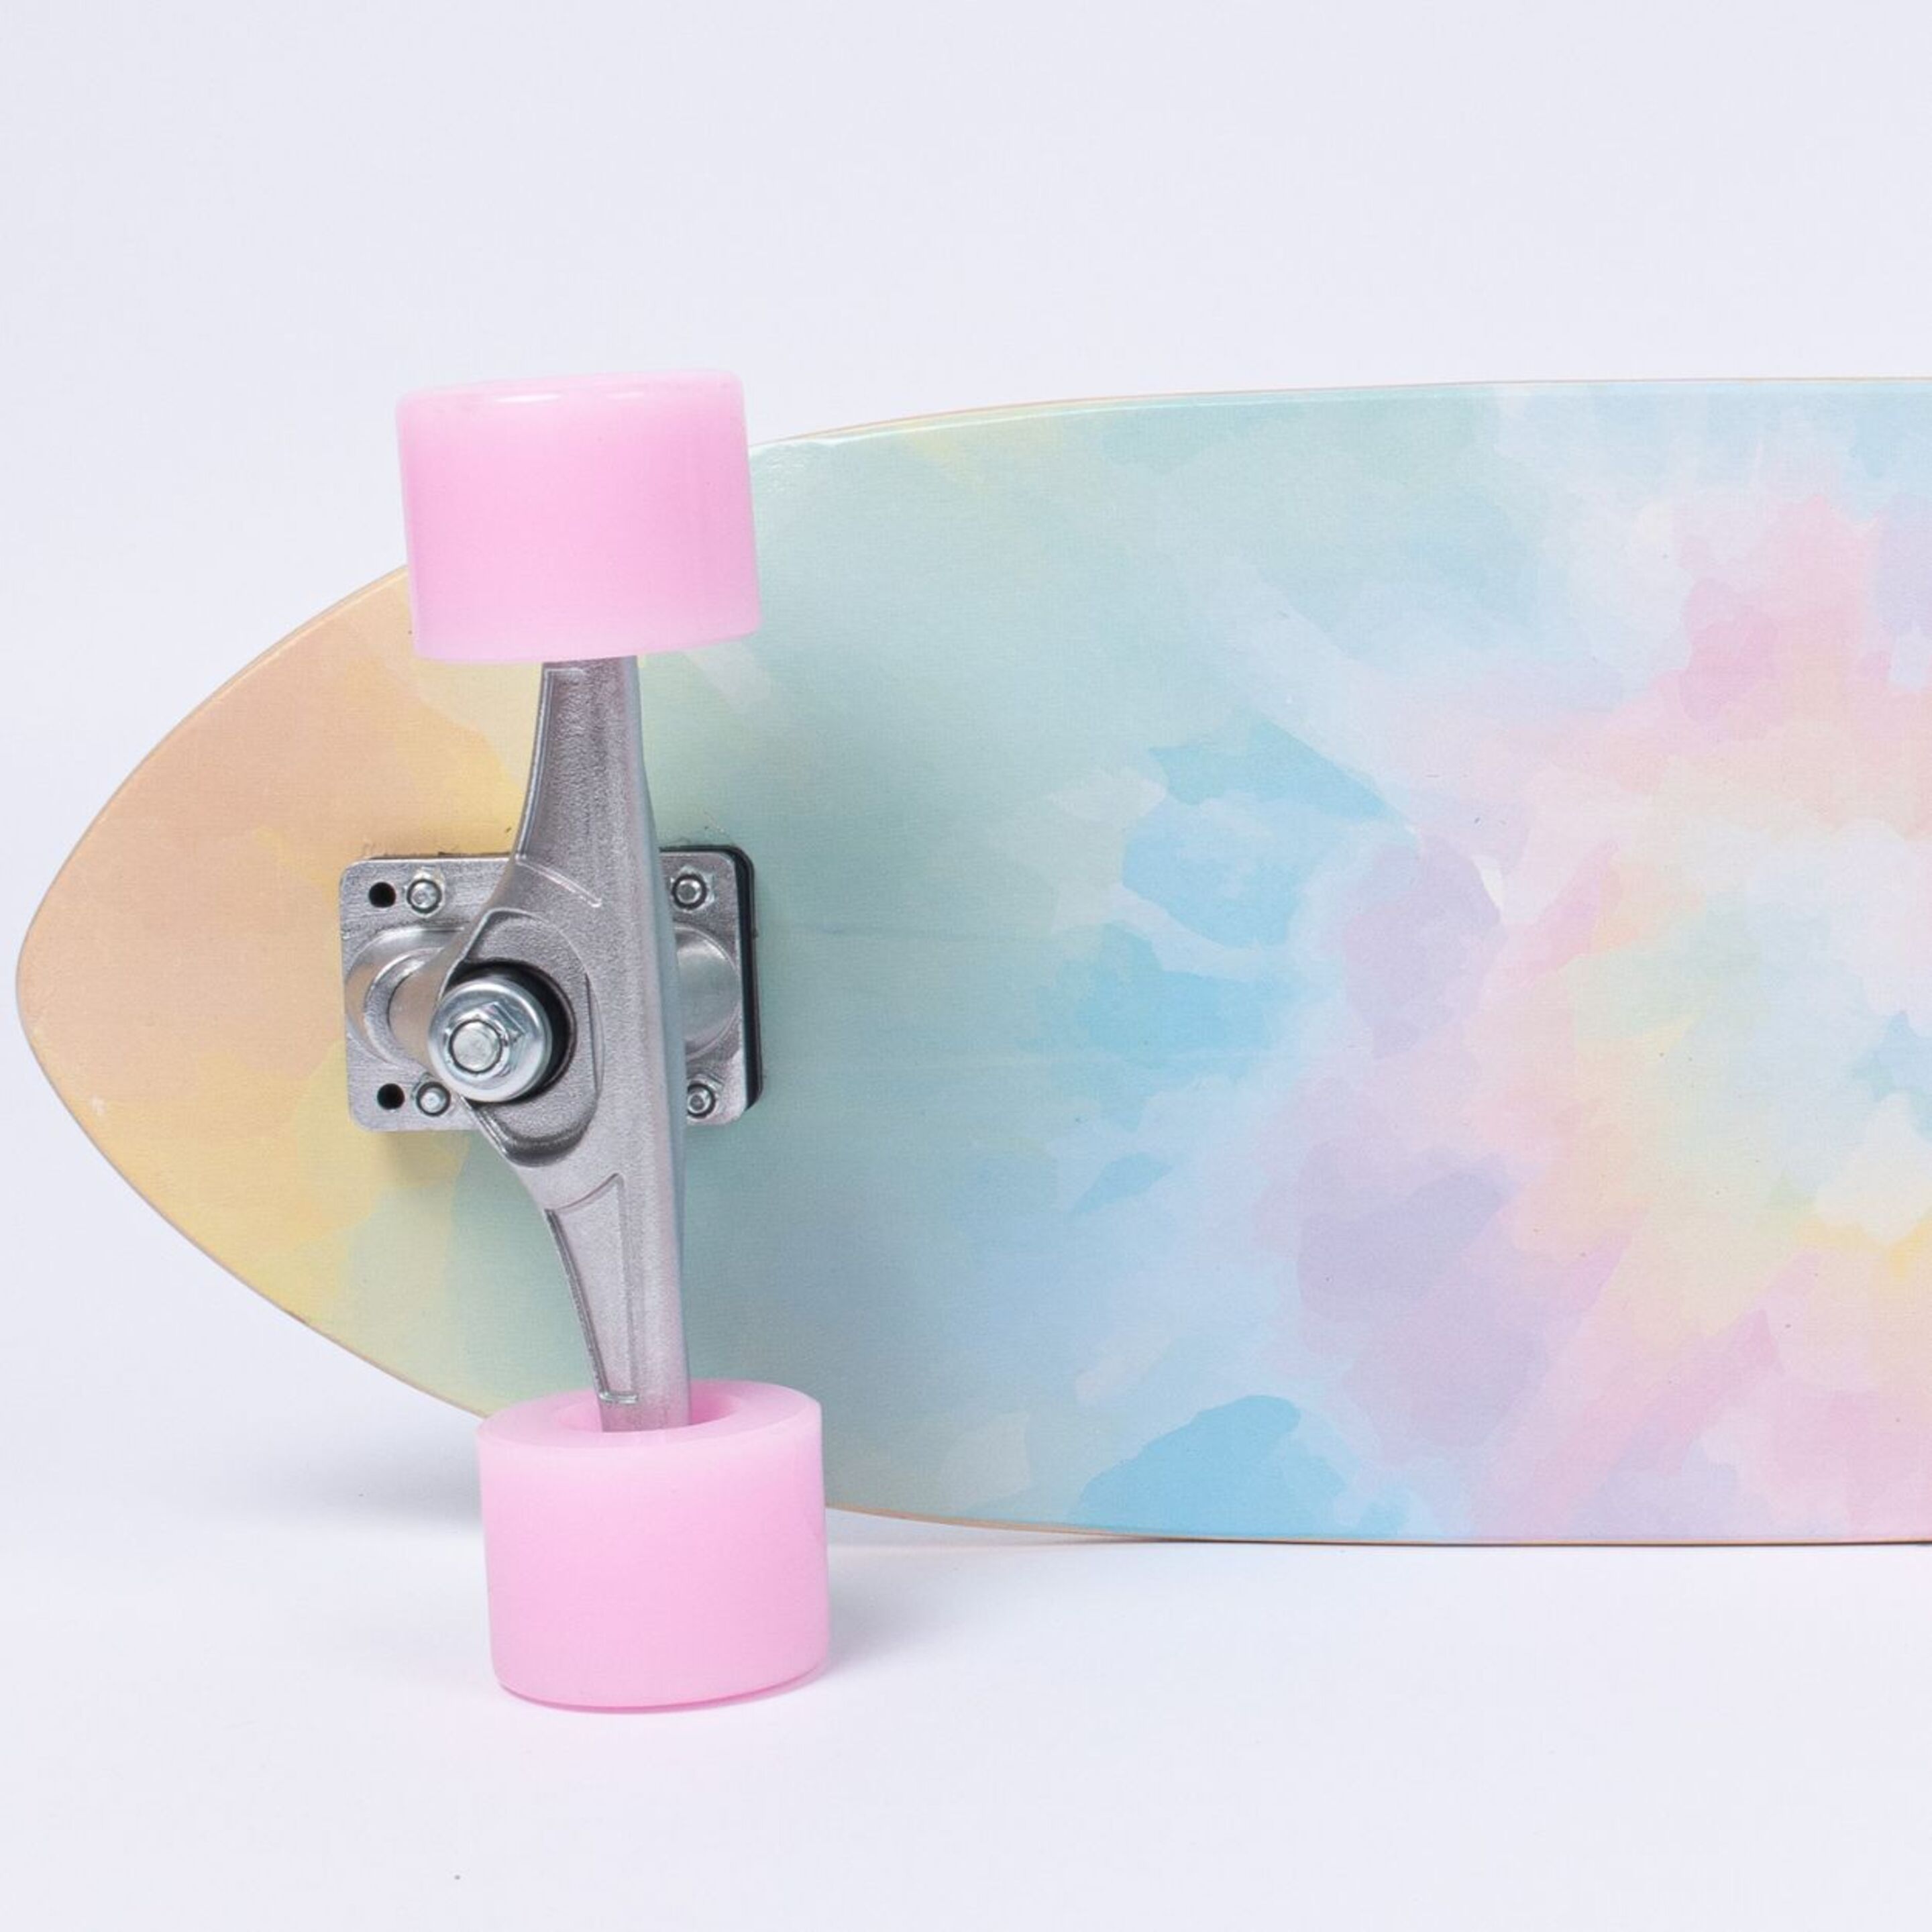 Tabla Surfskate Flamingueo Diseño Tie Dye - Multicolor  MKP